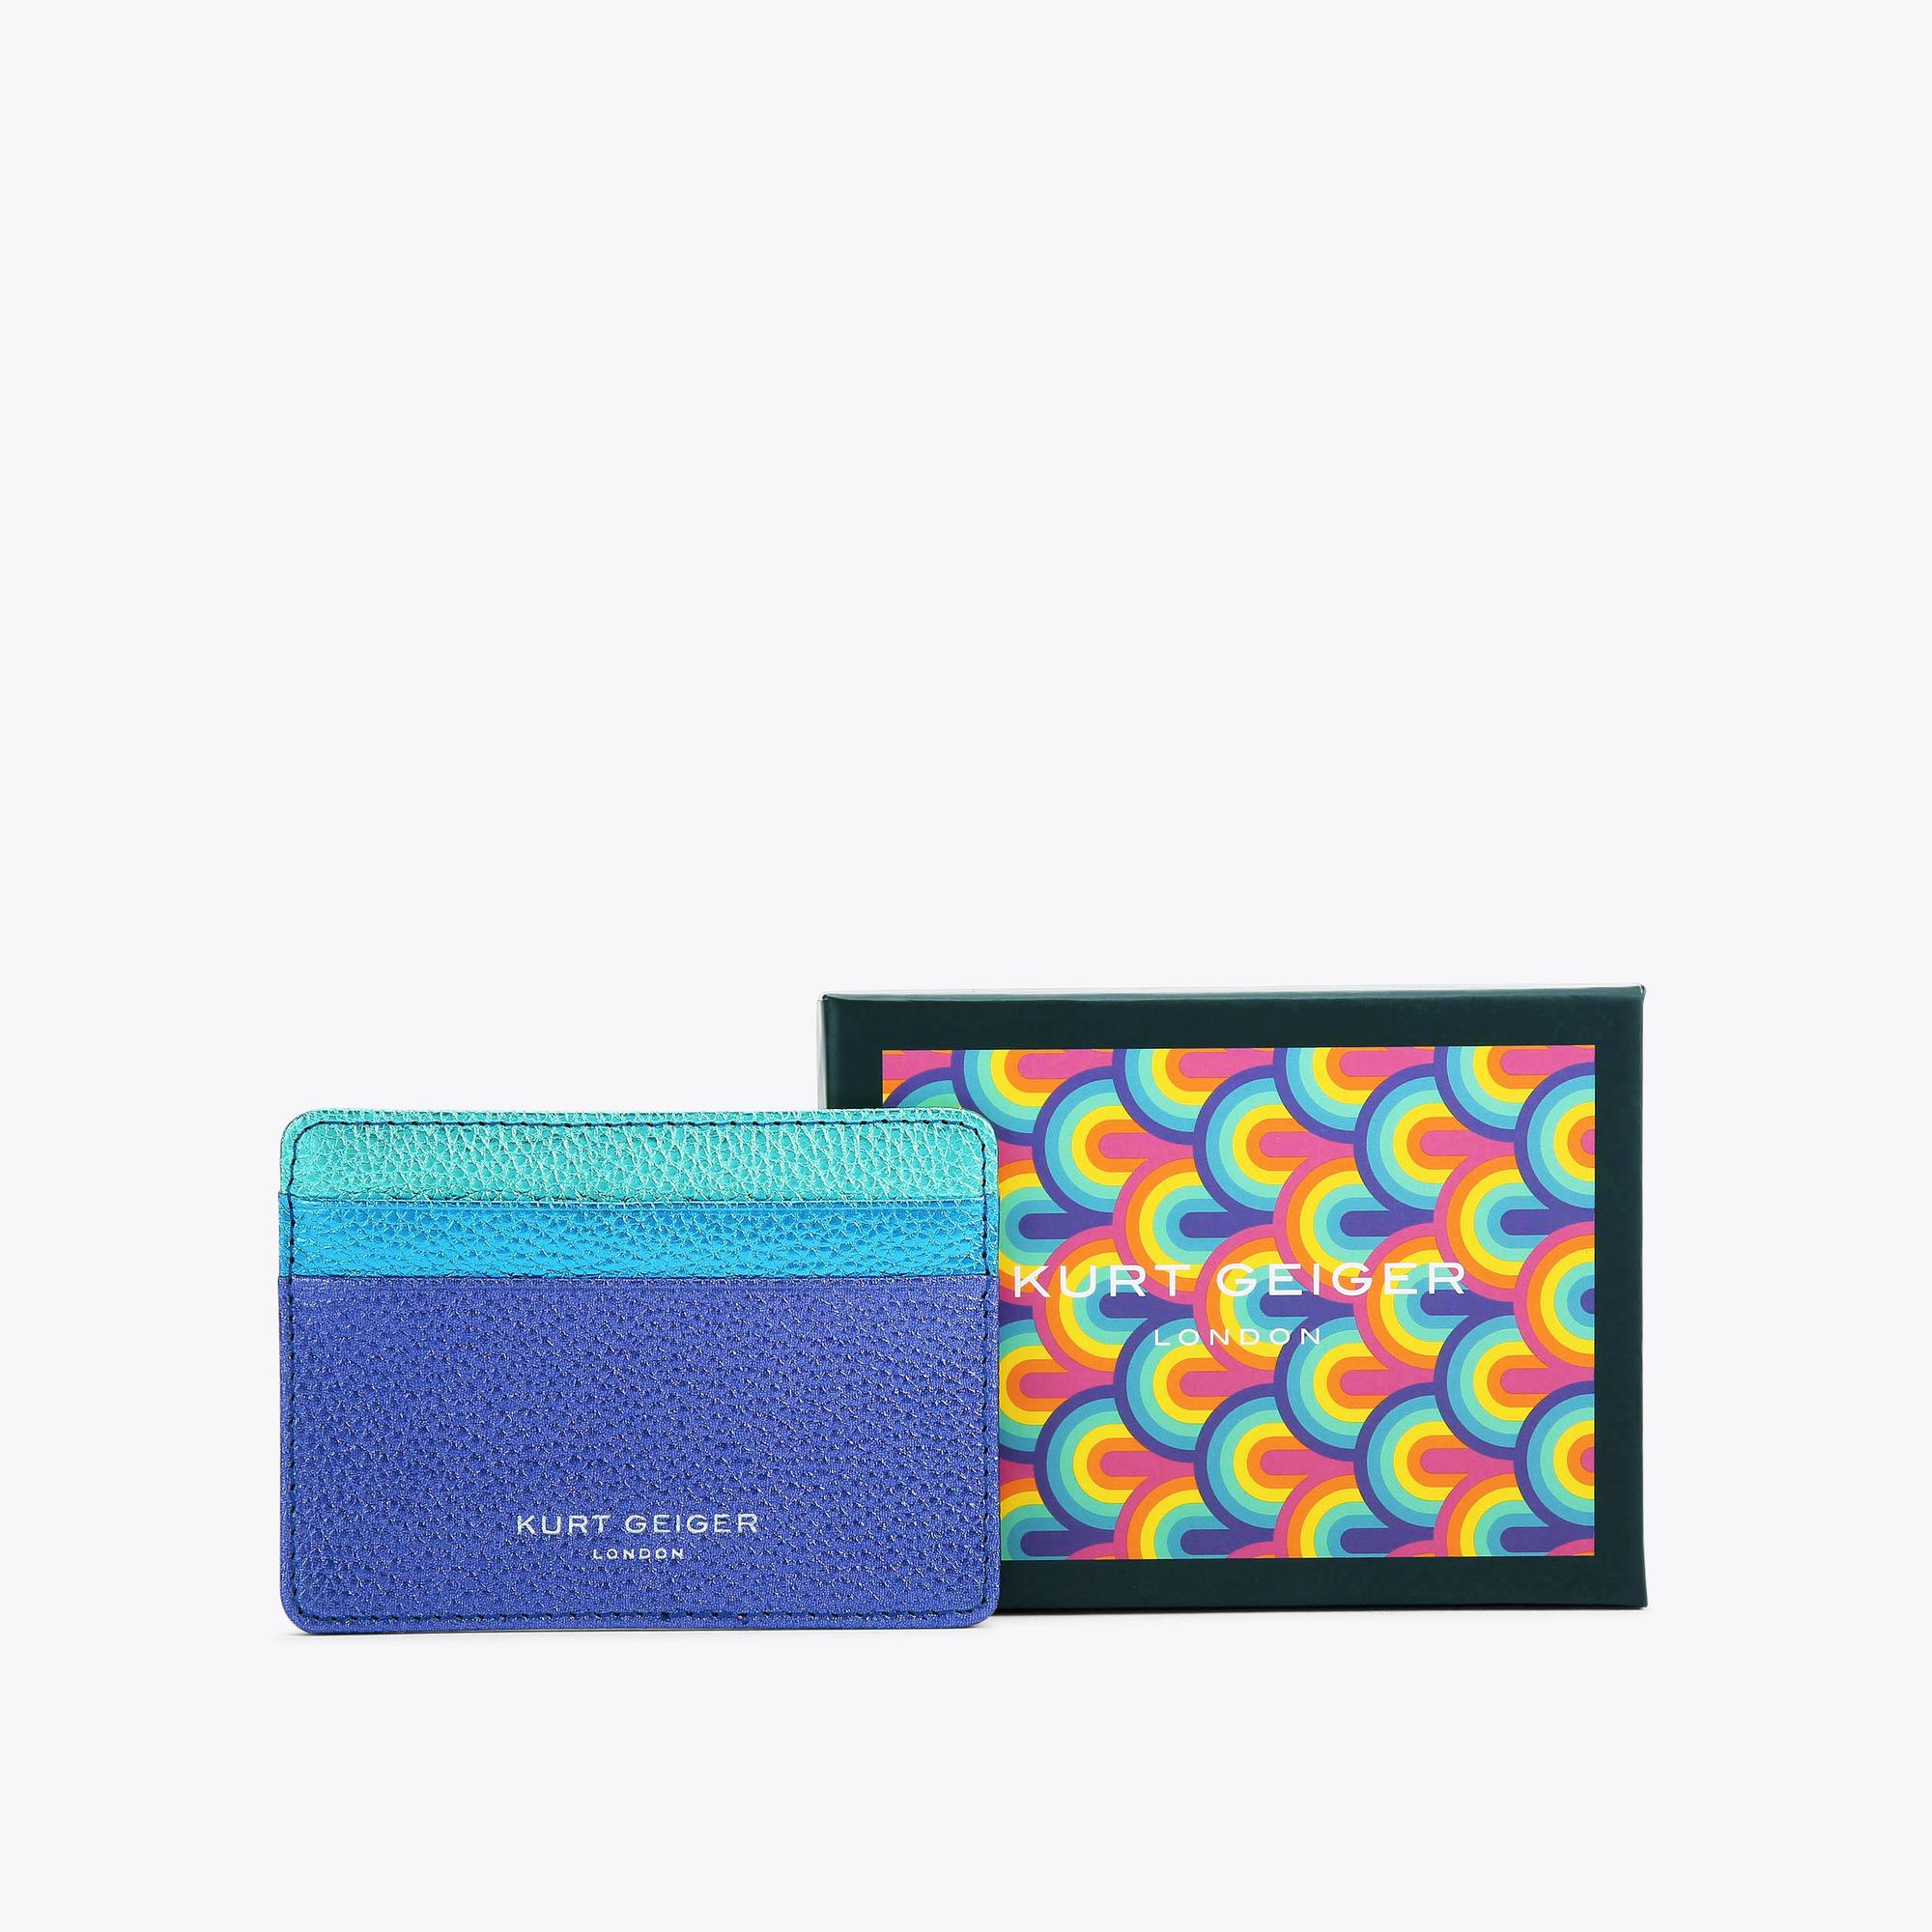 Kurt Geiger London Small Zip Around Multicolor Hearts Wallet